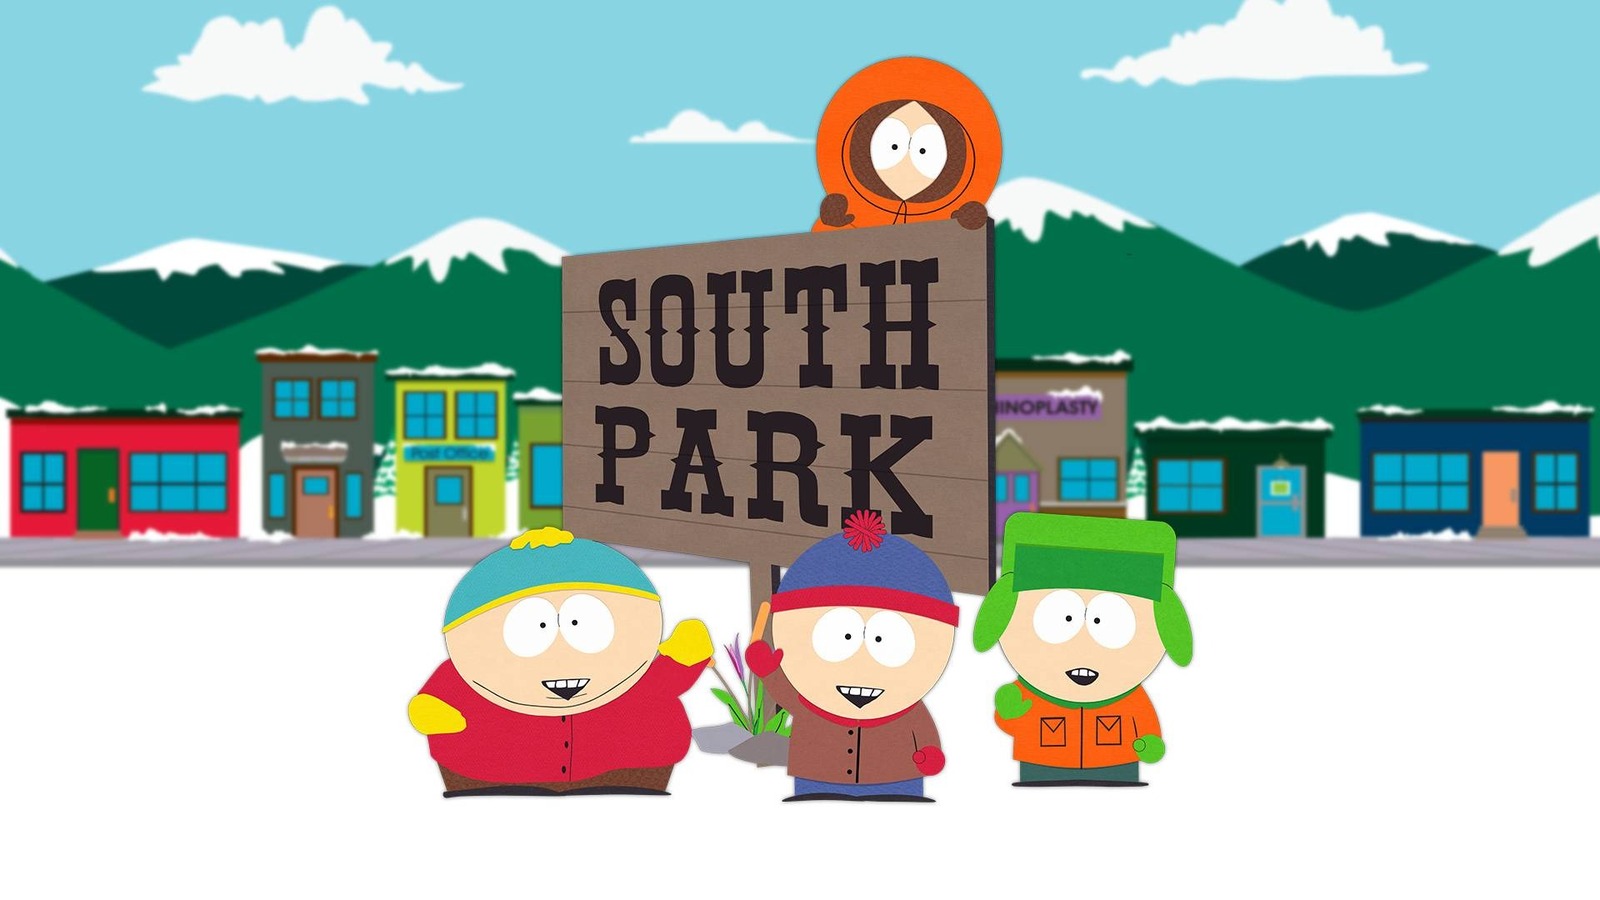 25 season south park 'South Park